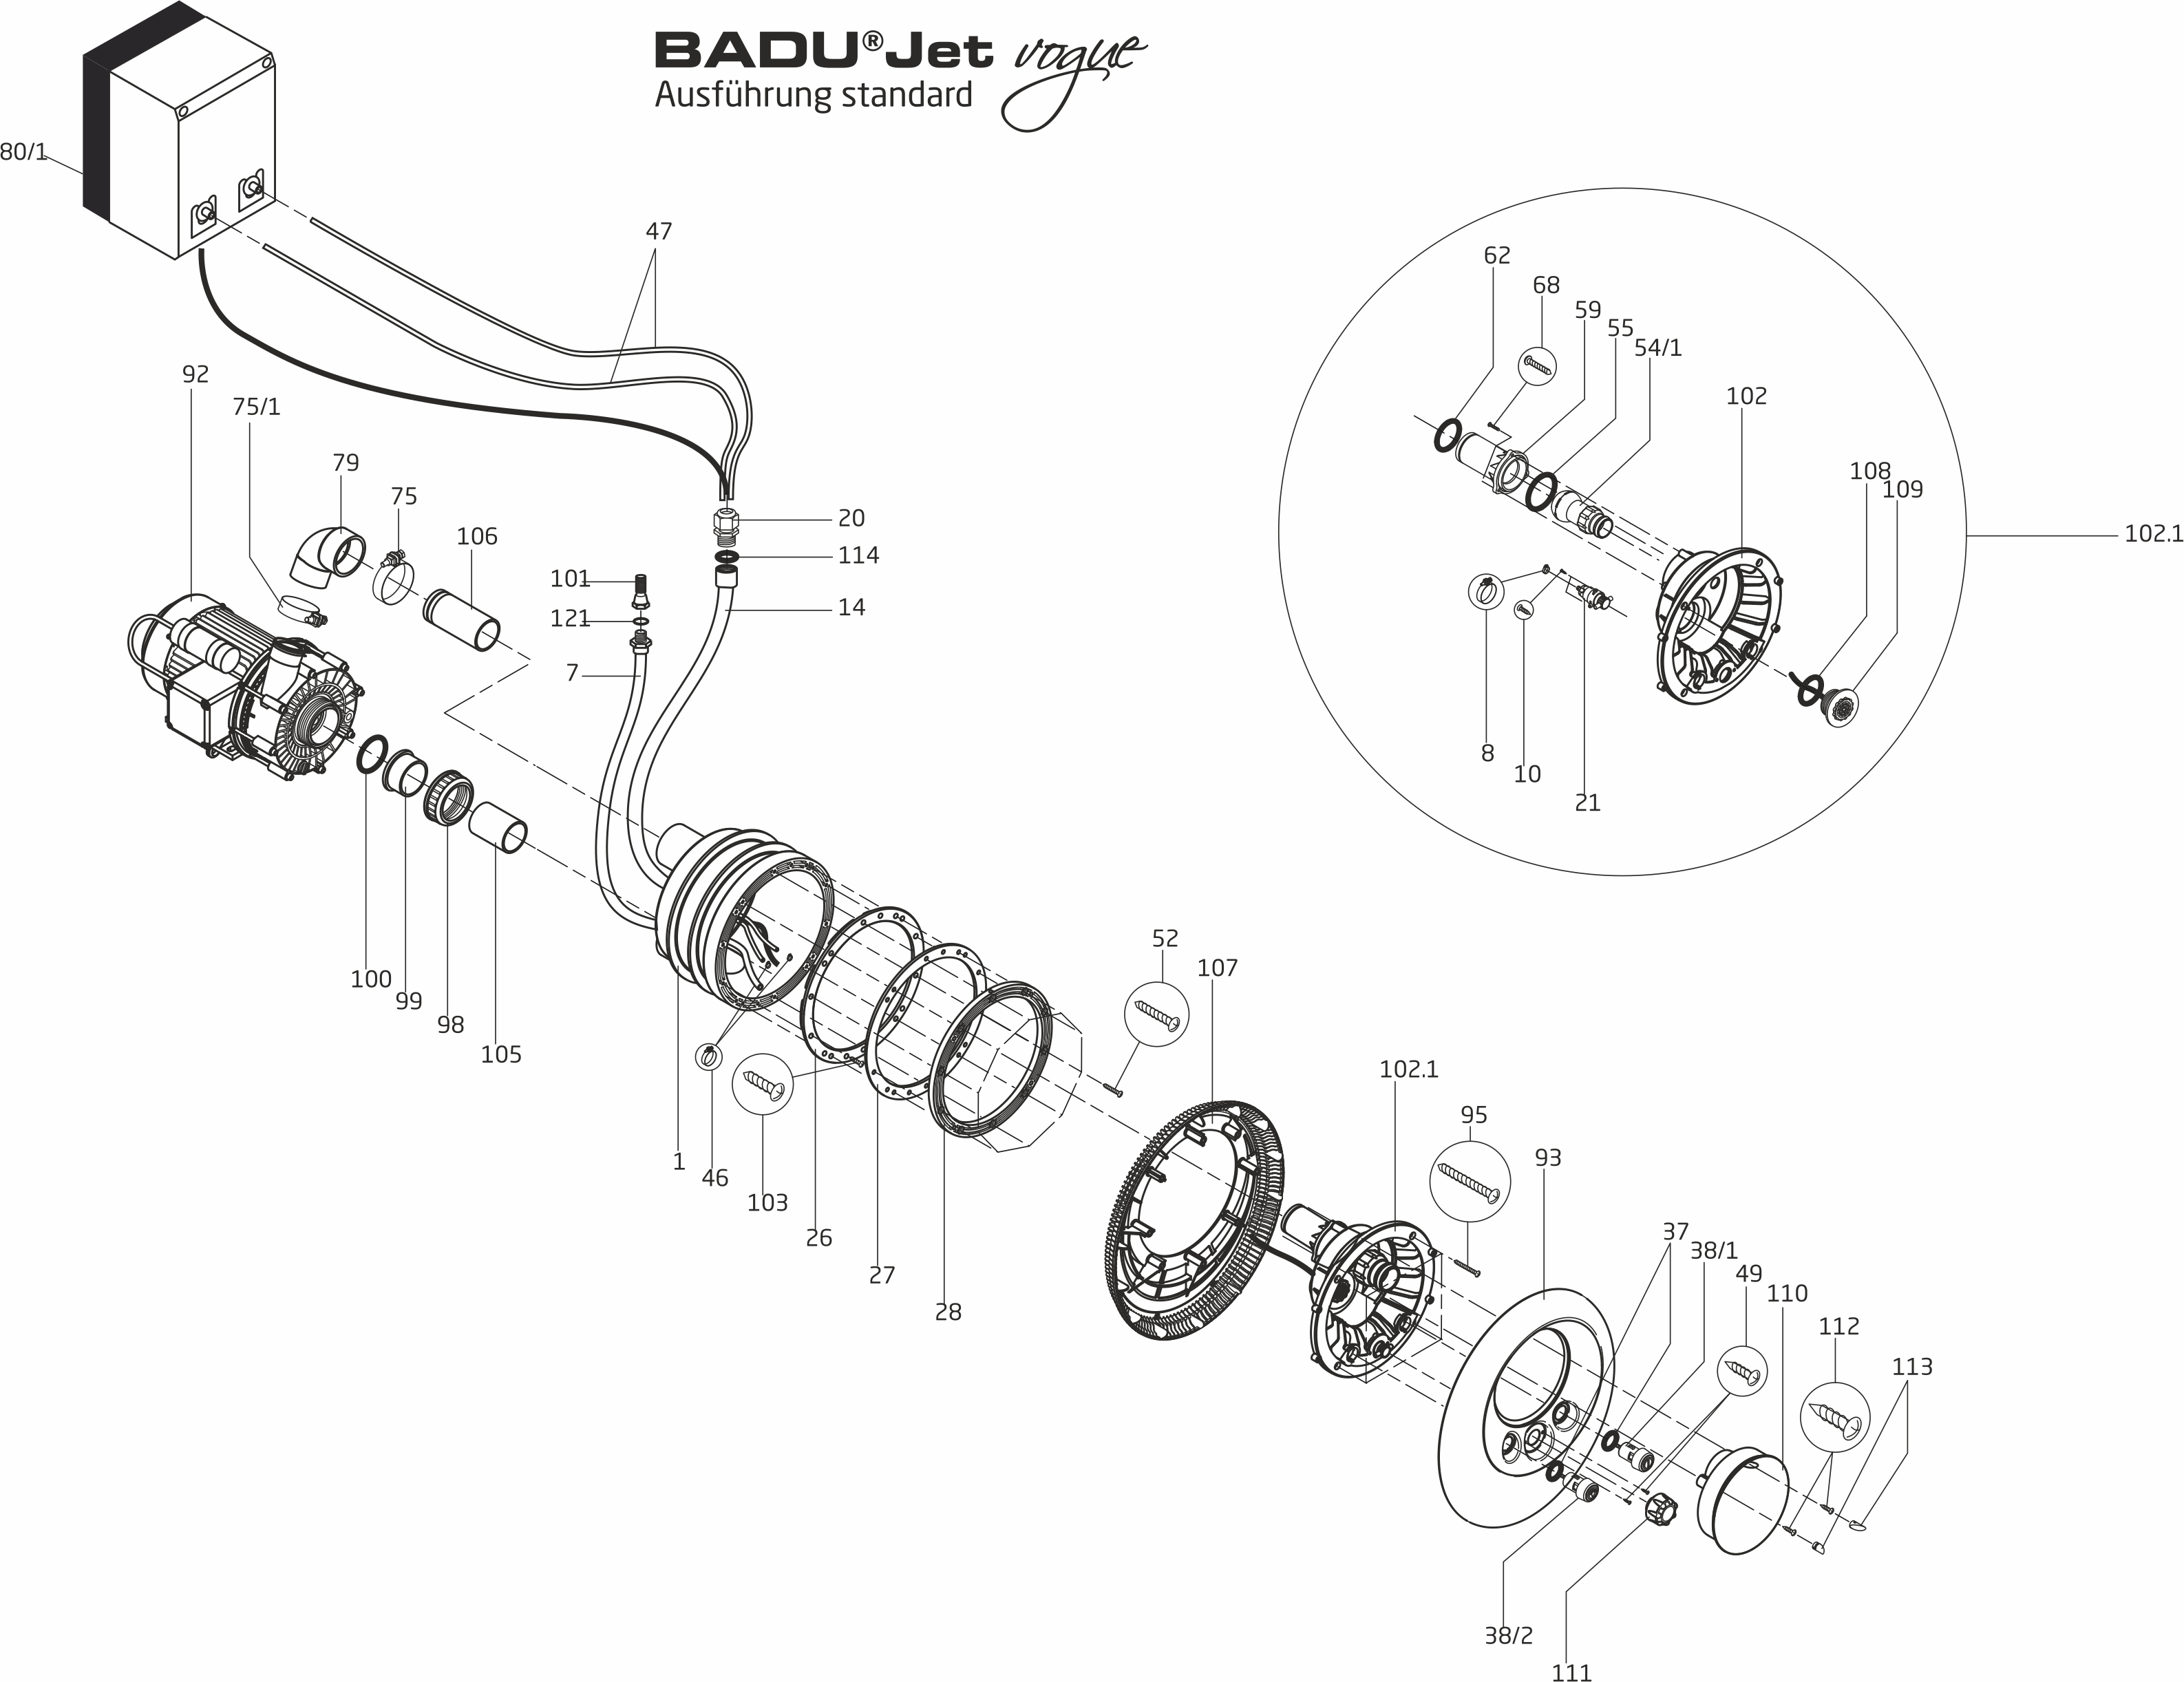 BADU Jet Vogue counterflow pump